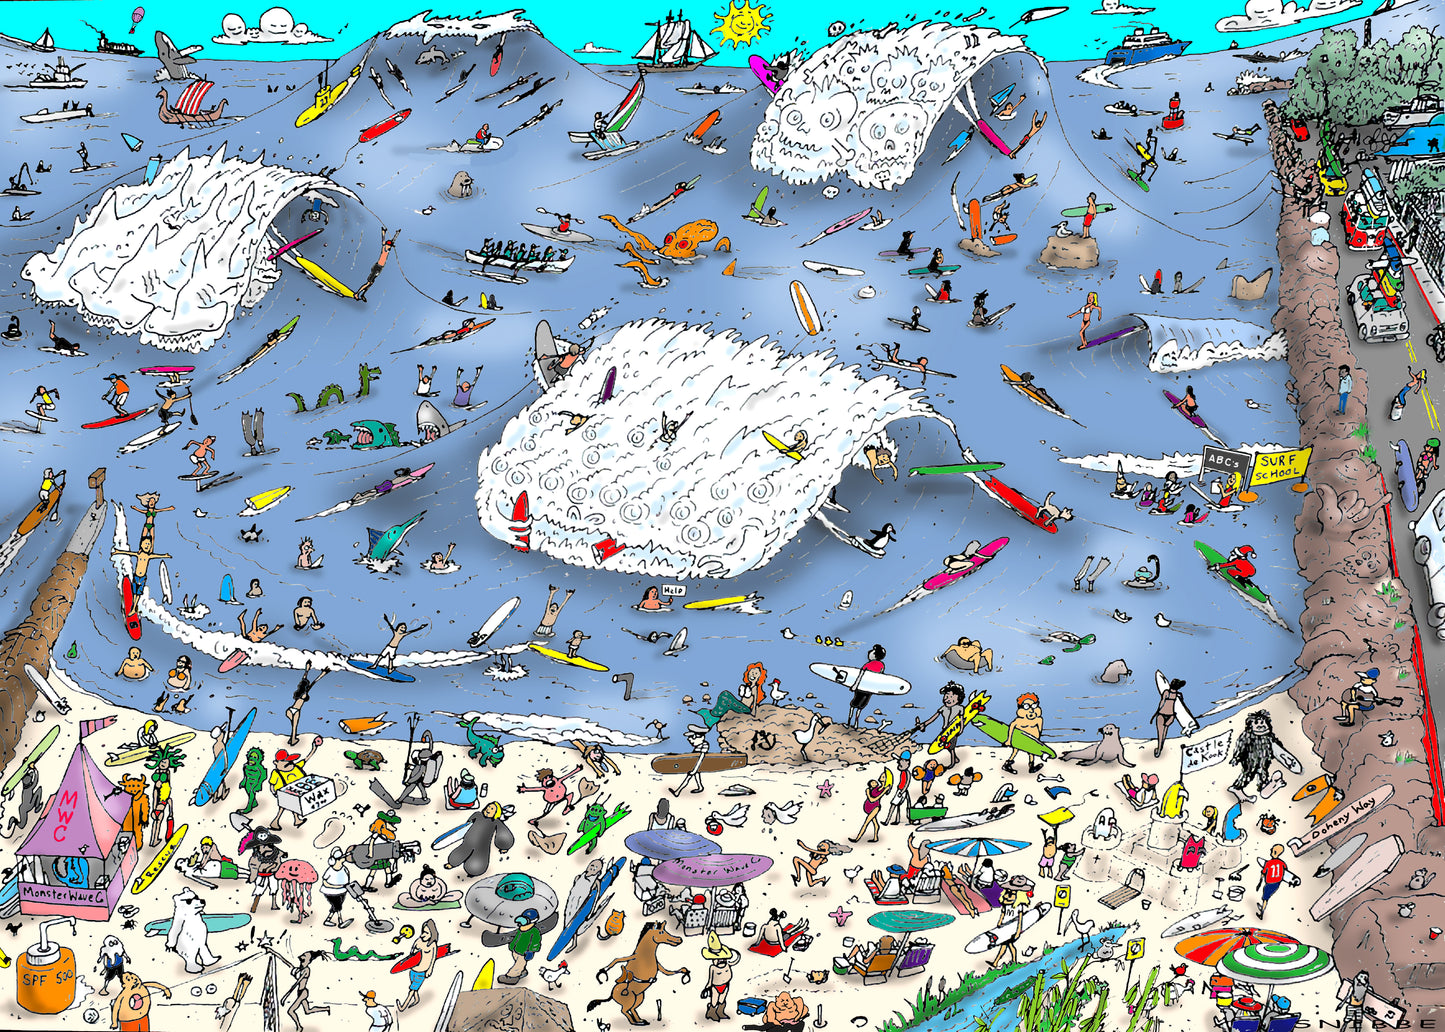 Doheny Surfing Beach - 1,000 Piece Jigsaw Puzzle